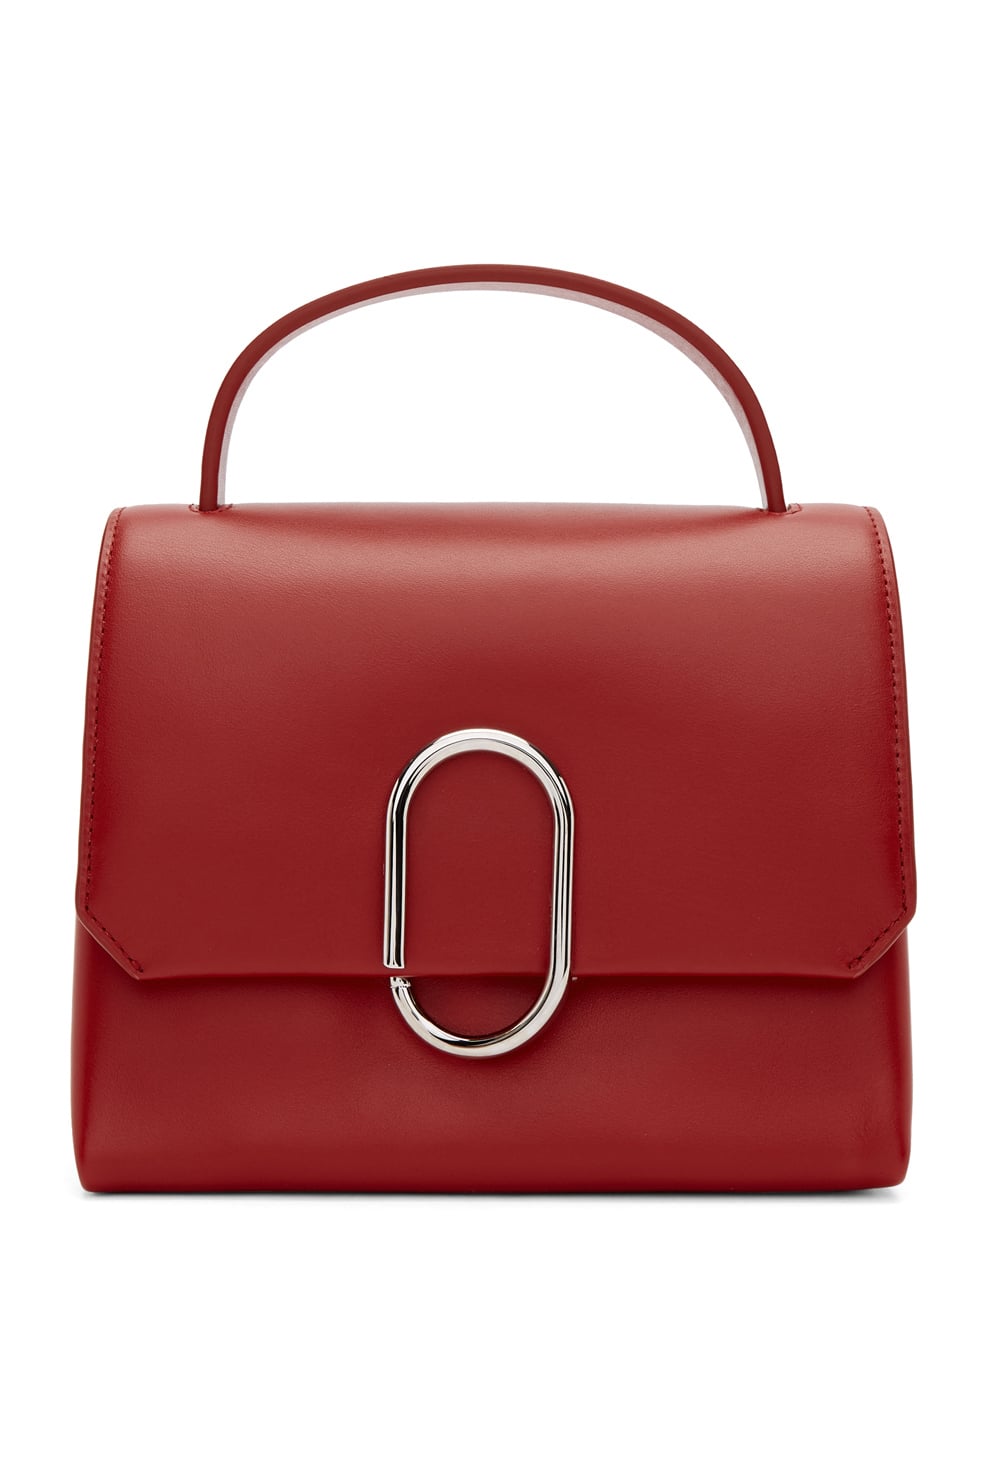 3.1 Phillip Lim Alix Mini Top Handle Satchel | Every Handbag Shape You Need For 2020, Because It's to Shop | POPSUGAR Fashion Photo